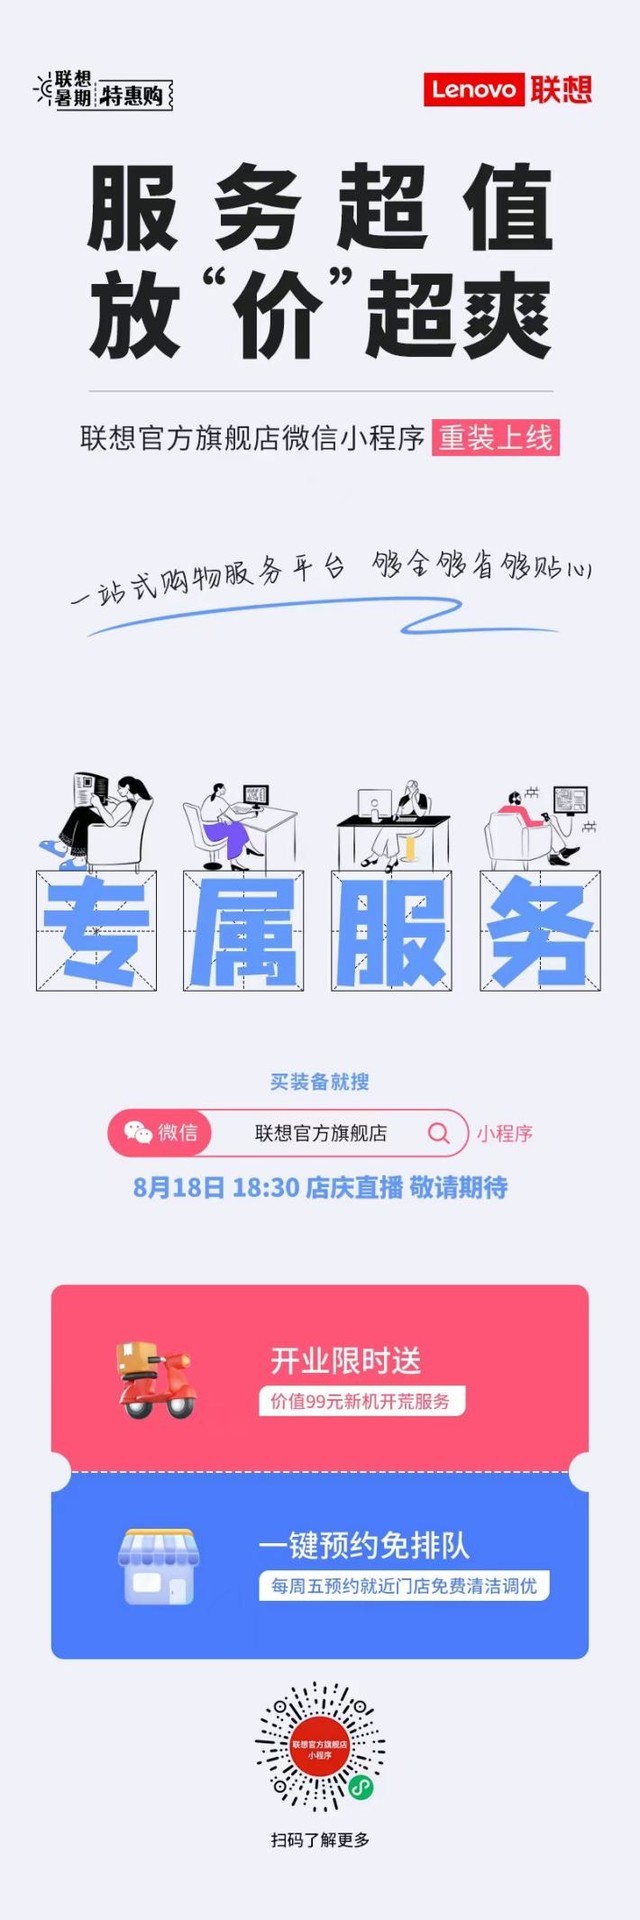  Live broadcast welfare | Lenovo Goodwill Recommender Li Xueqin Live broadcast surprise welfare! Send! Send!